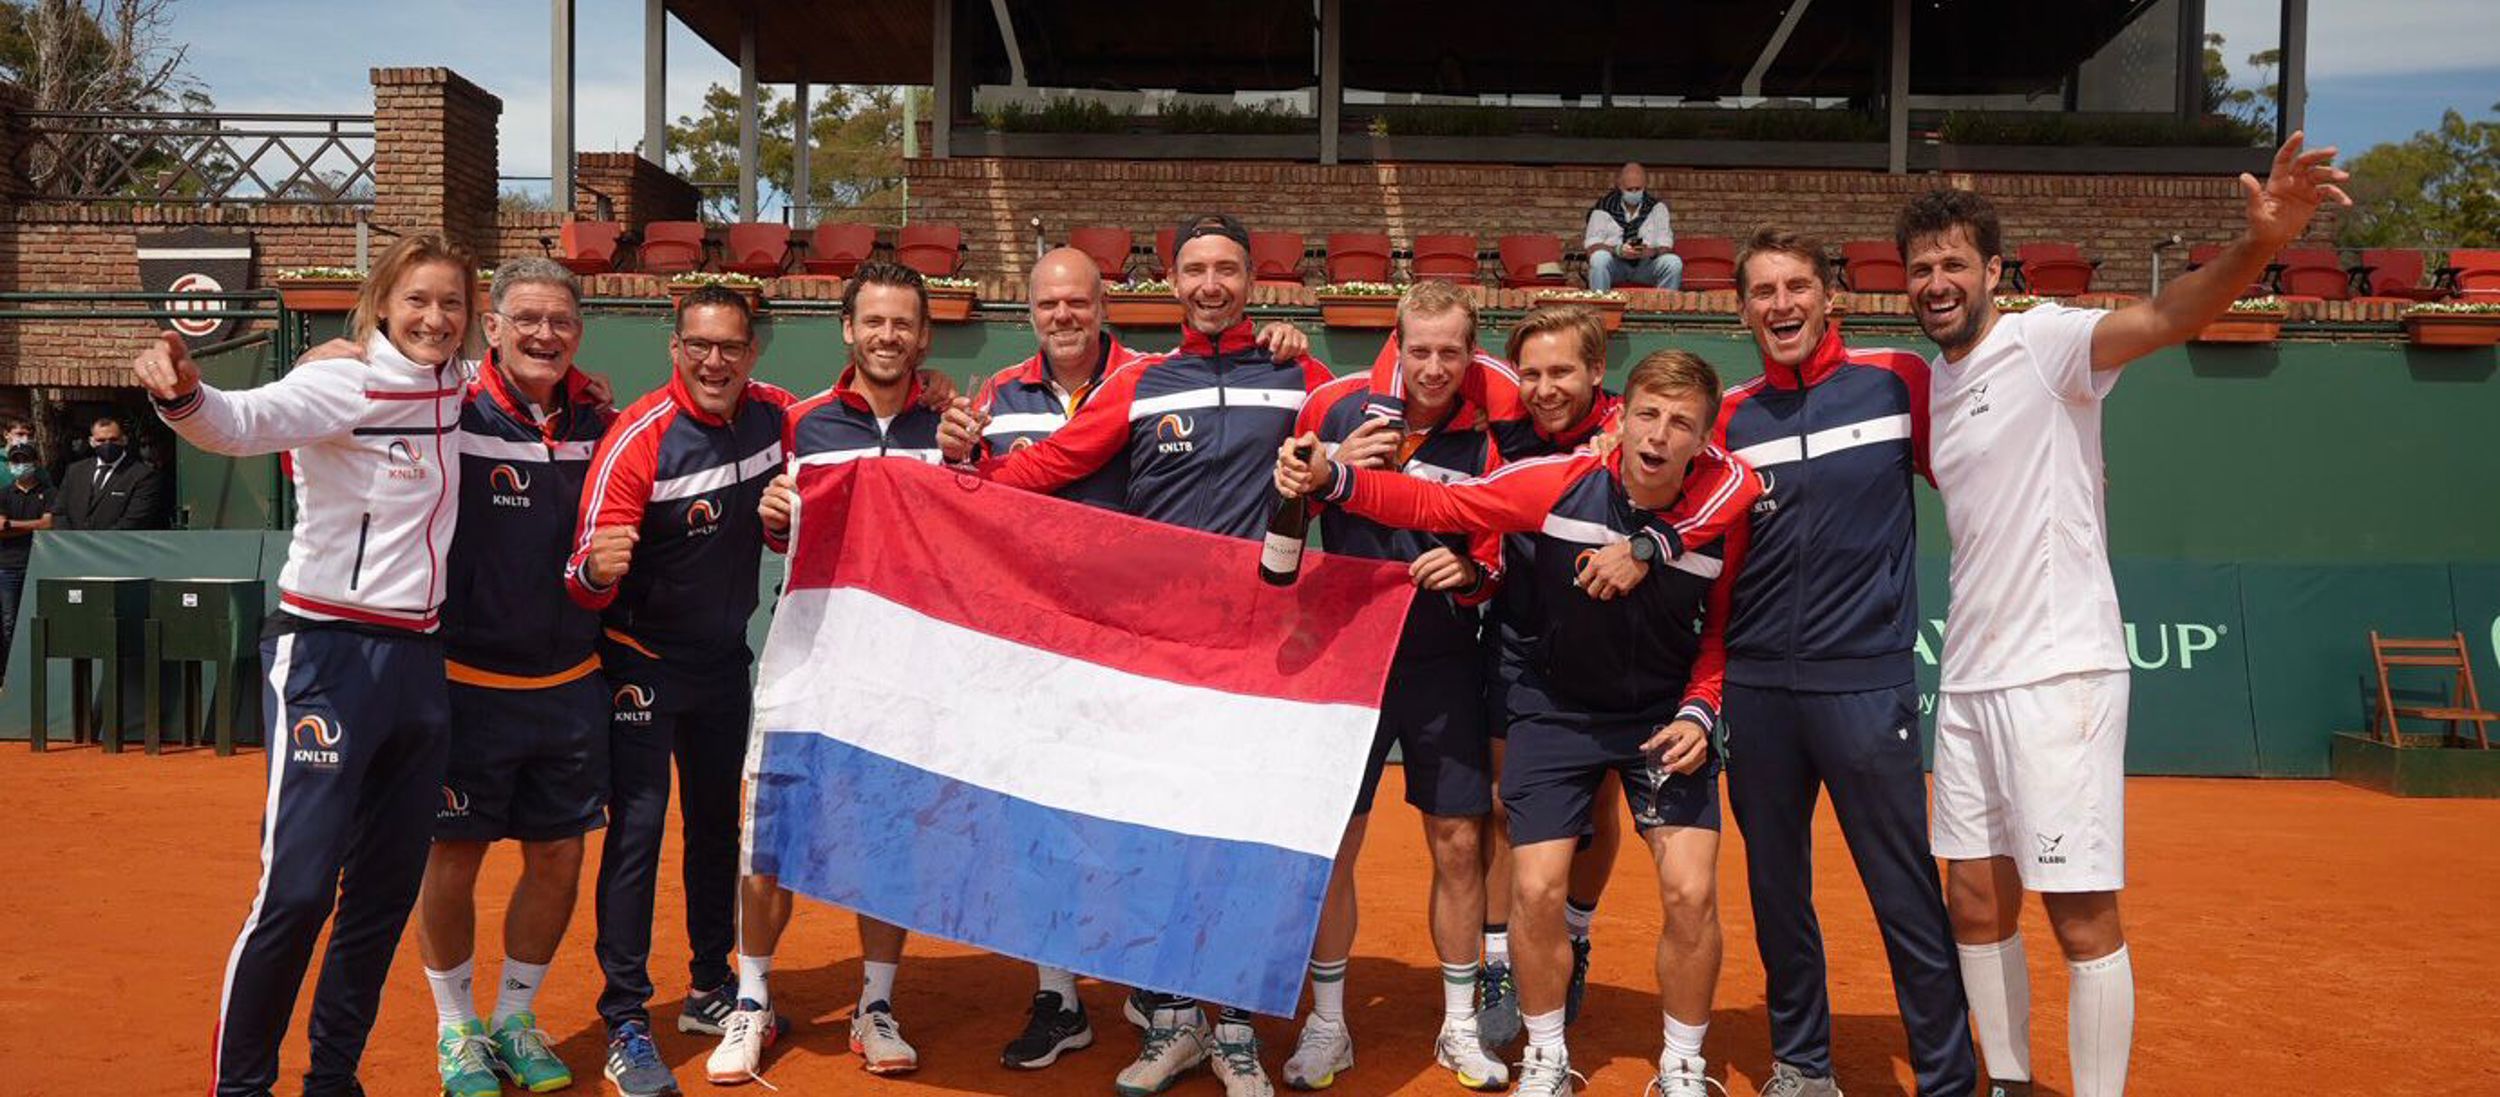 Davis Cup team